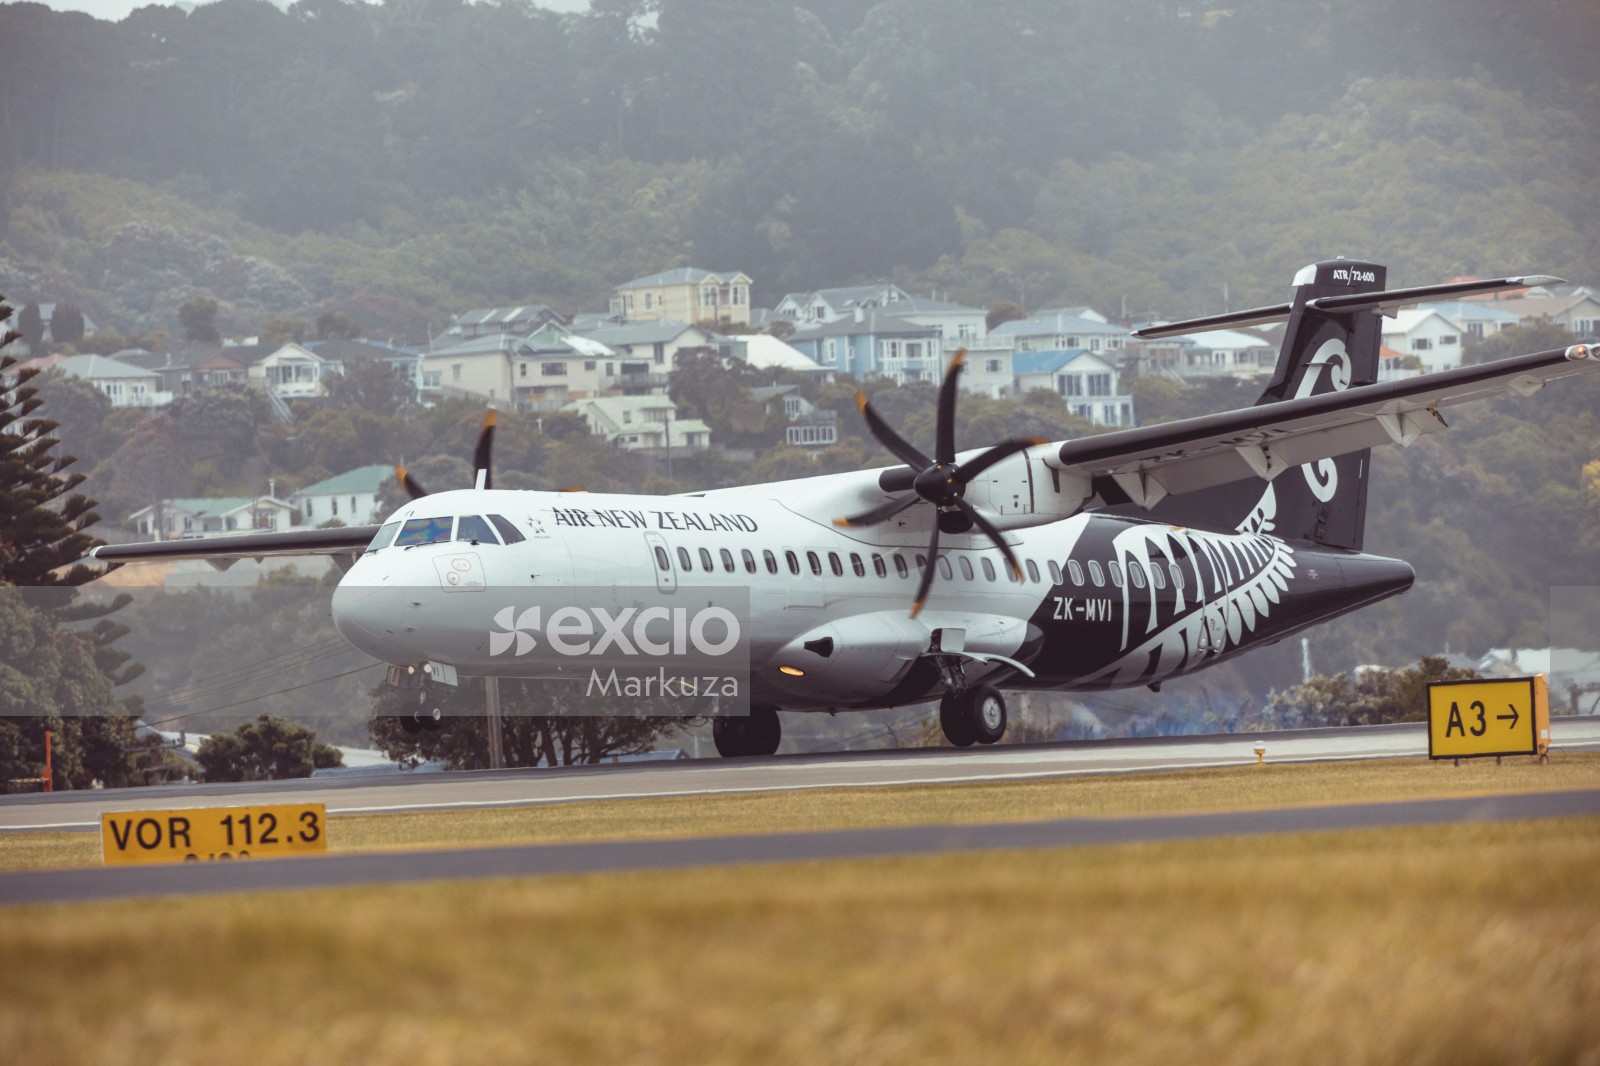 AIR New Zealand domestic flight taking off